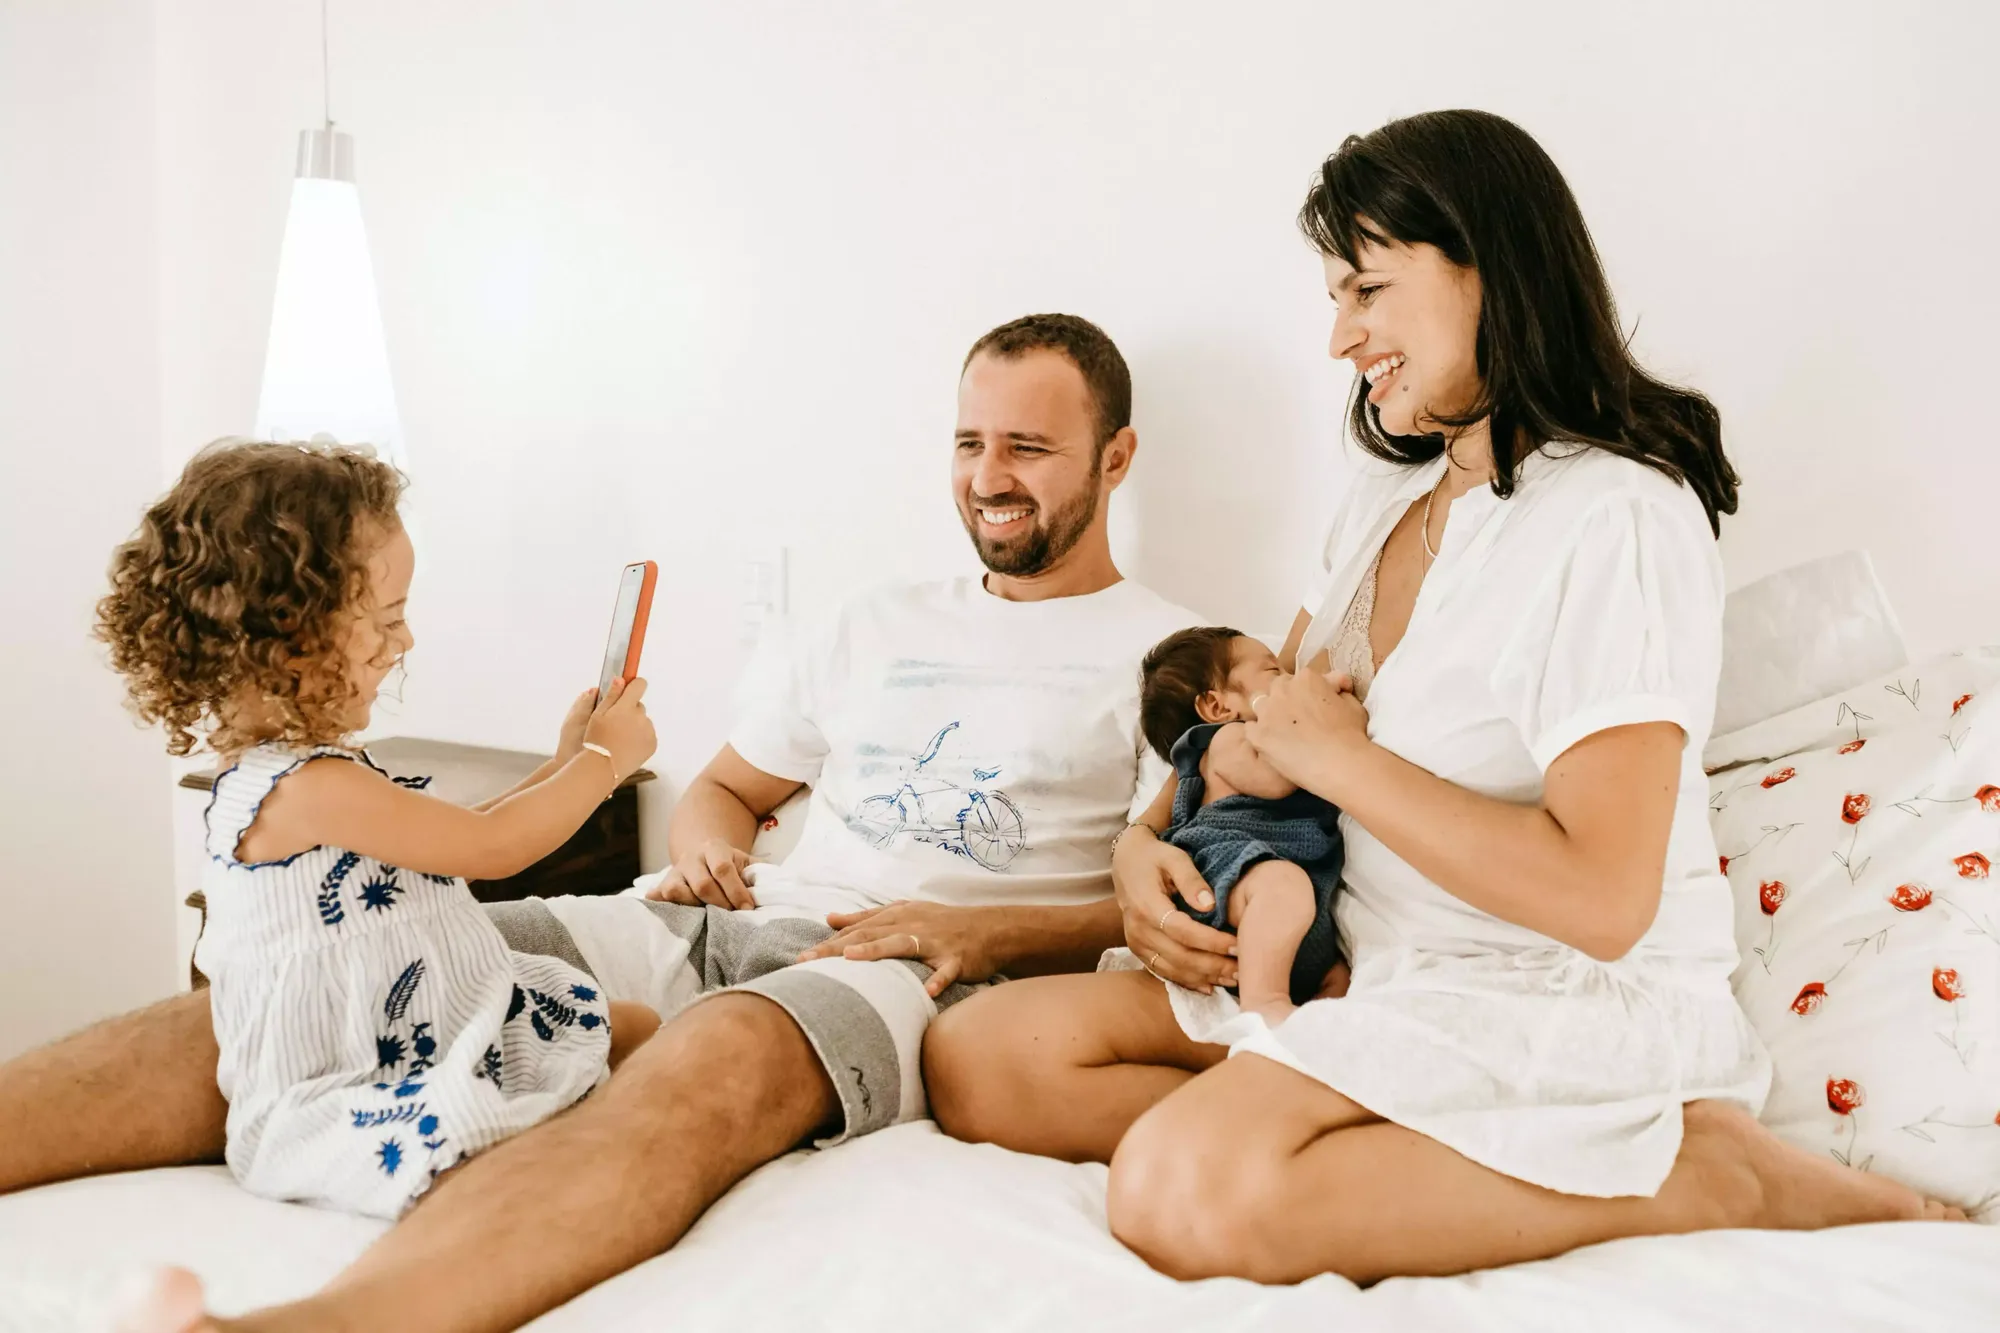 adoptive breastfeeding, holding baby, newborn infant, newborn baby